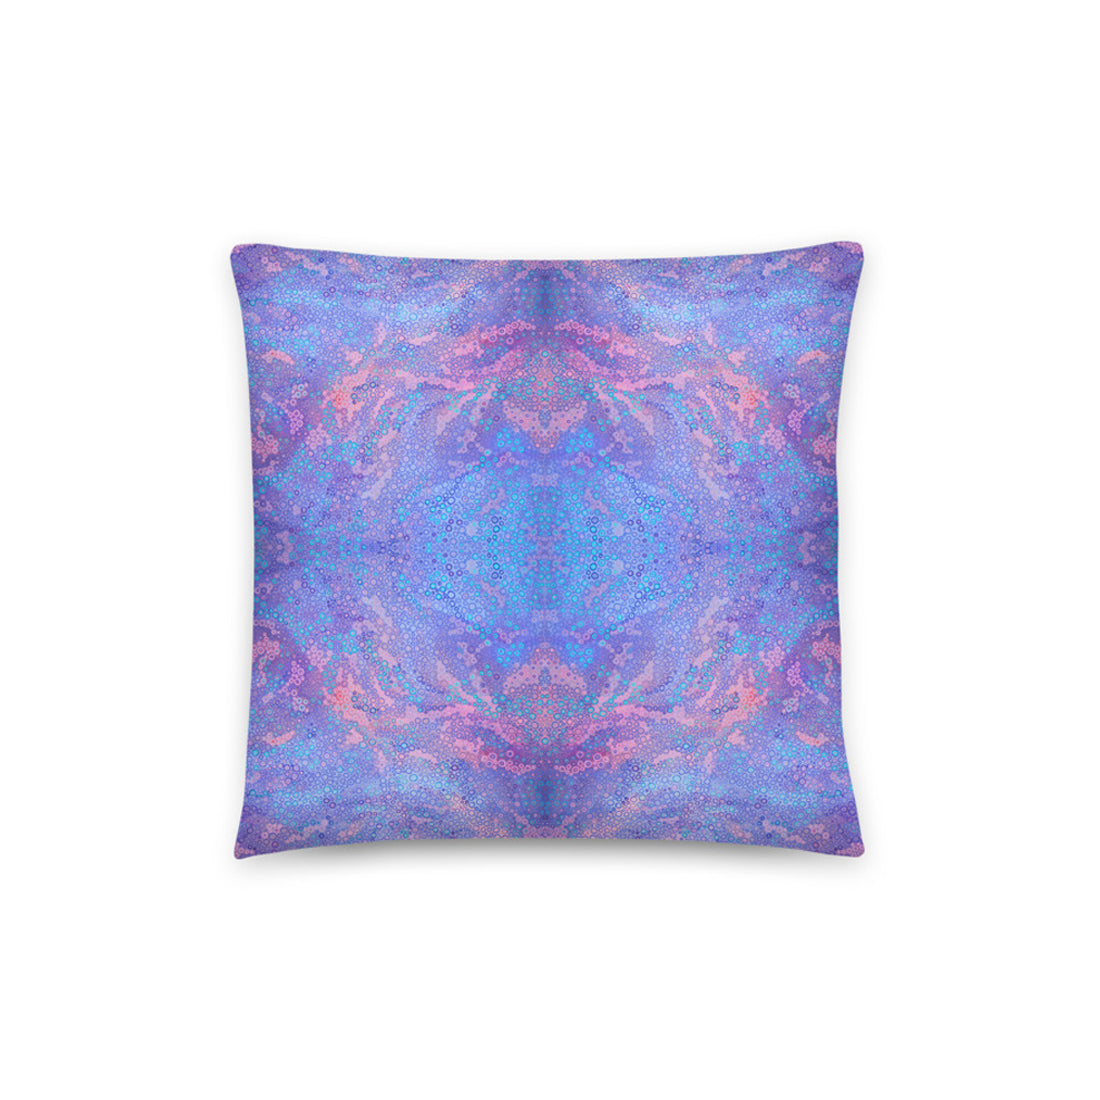  beautiful cushion cover features a kaleidoscopic purple blue artwork